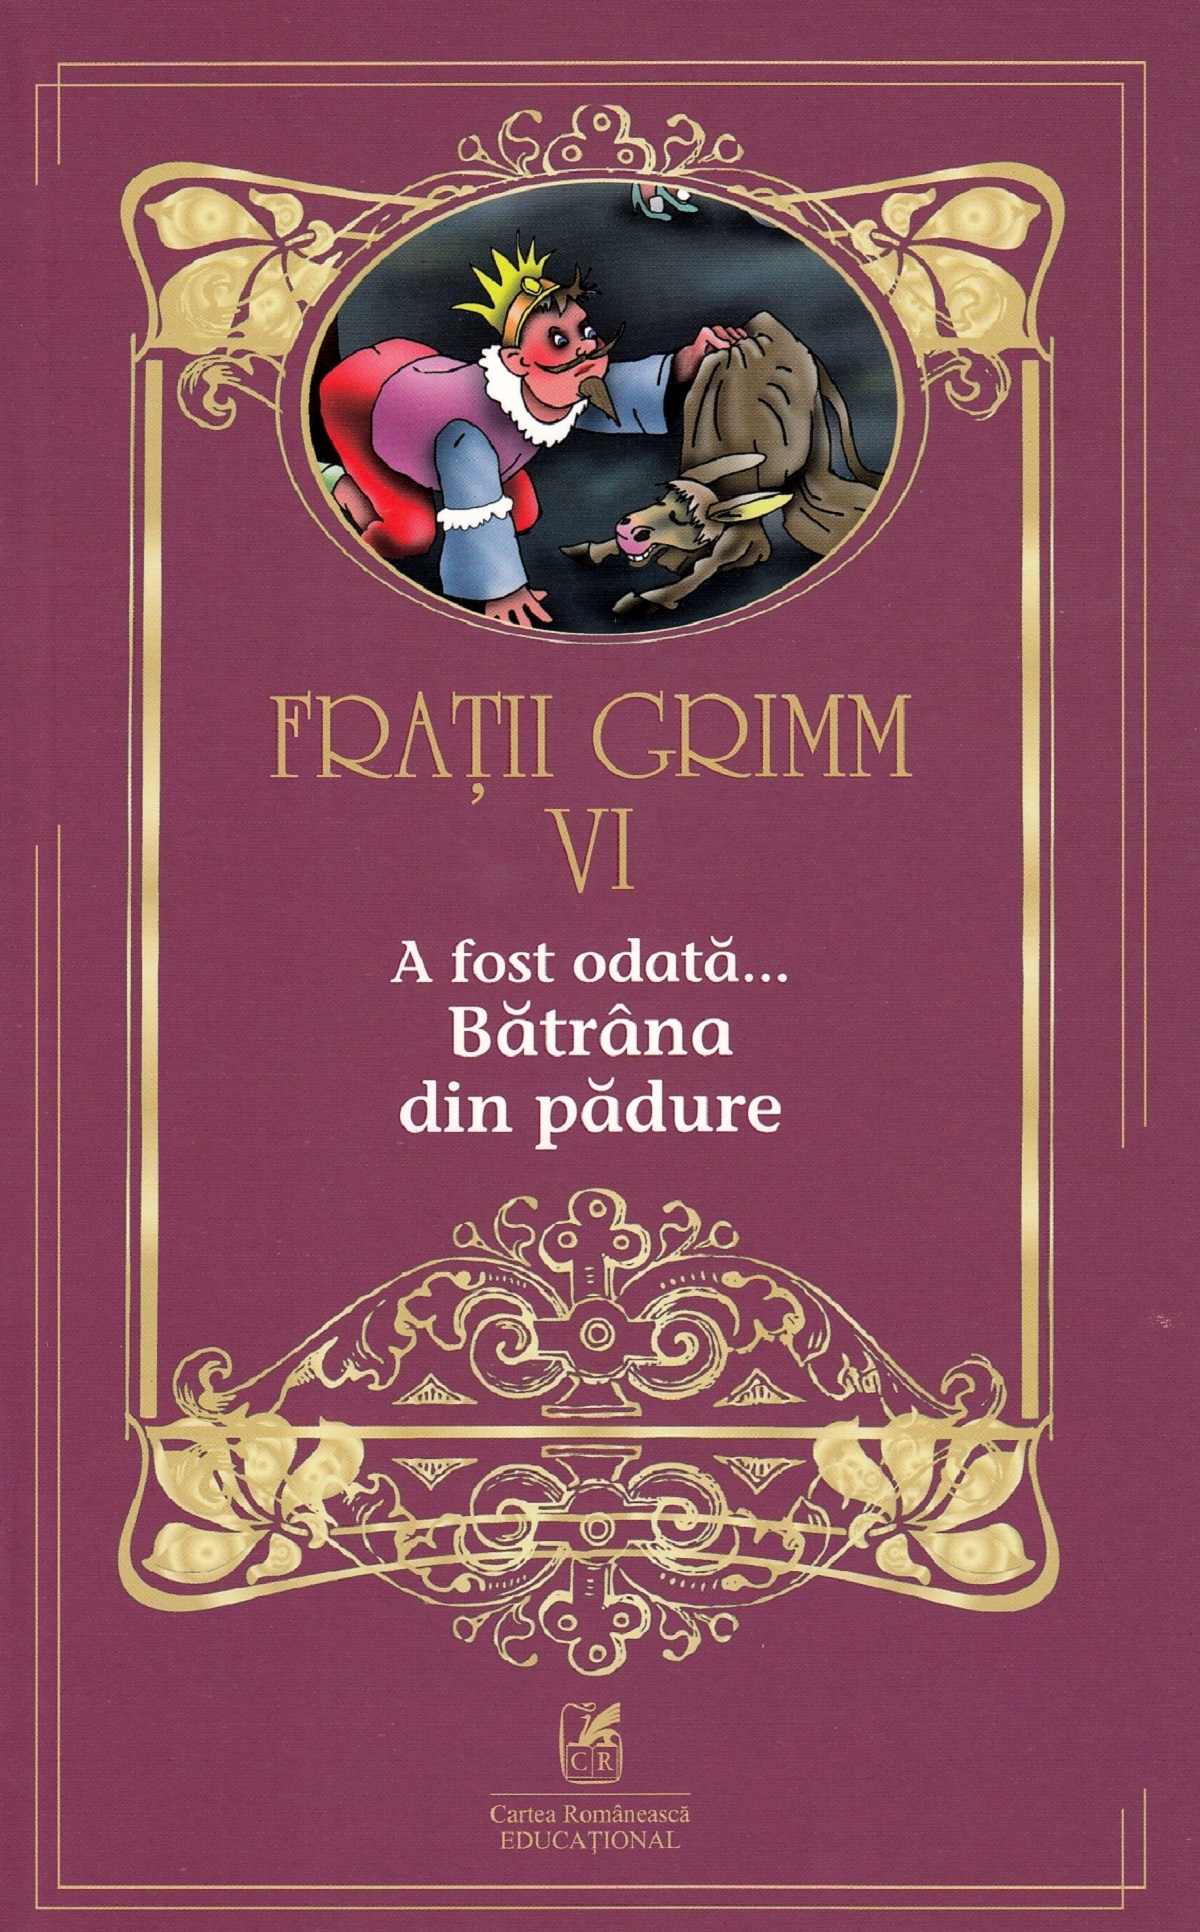 PDF A fost odata…Batrana din padure | Fratii Grimm Cartea Romaneasca educational Bibliografie scolara